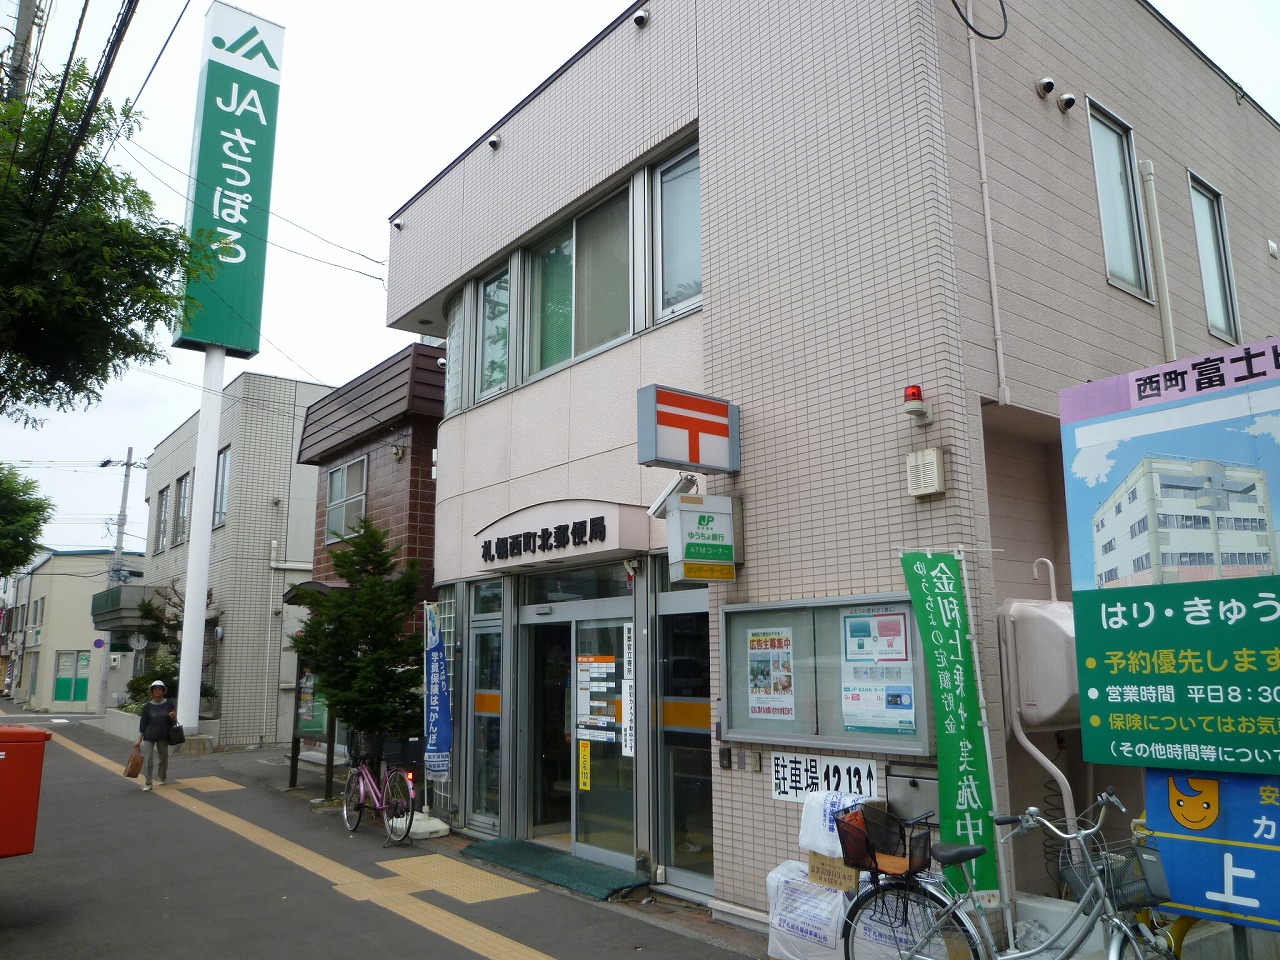 post office. 376m to Sapporo Nishimachikita post office (post office)